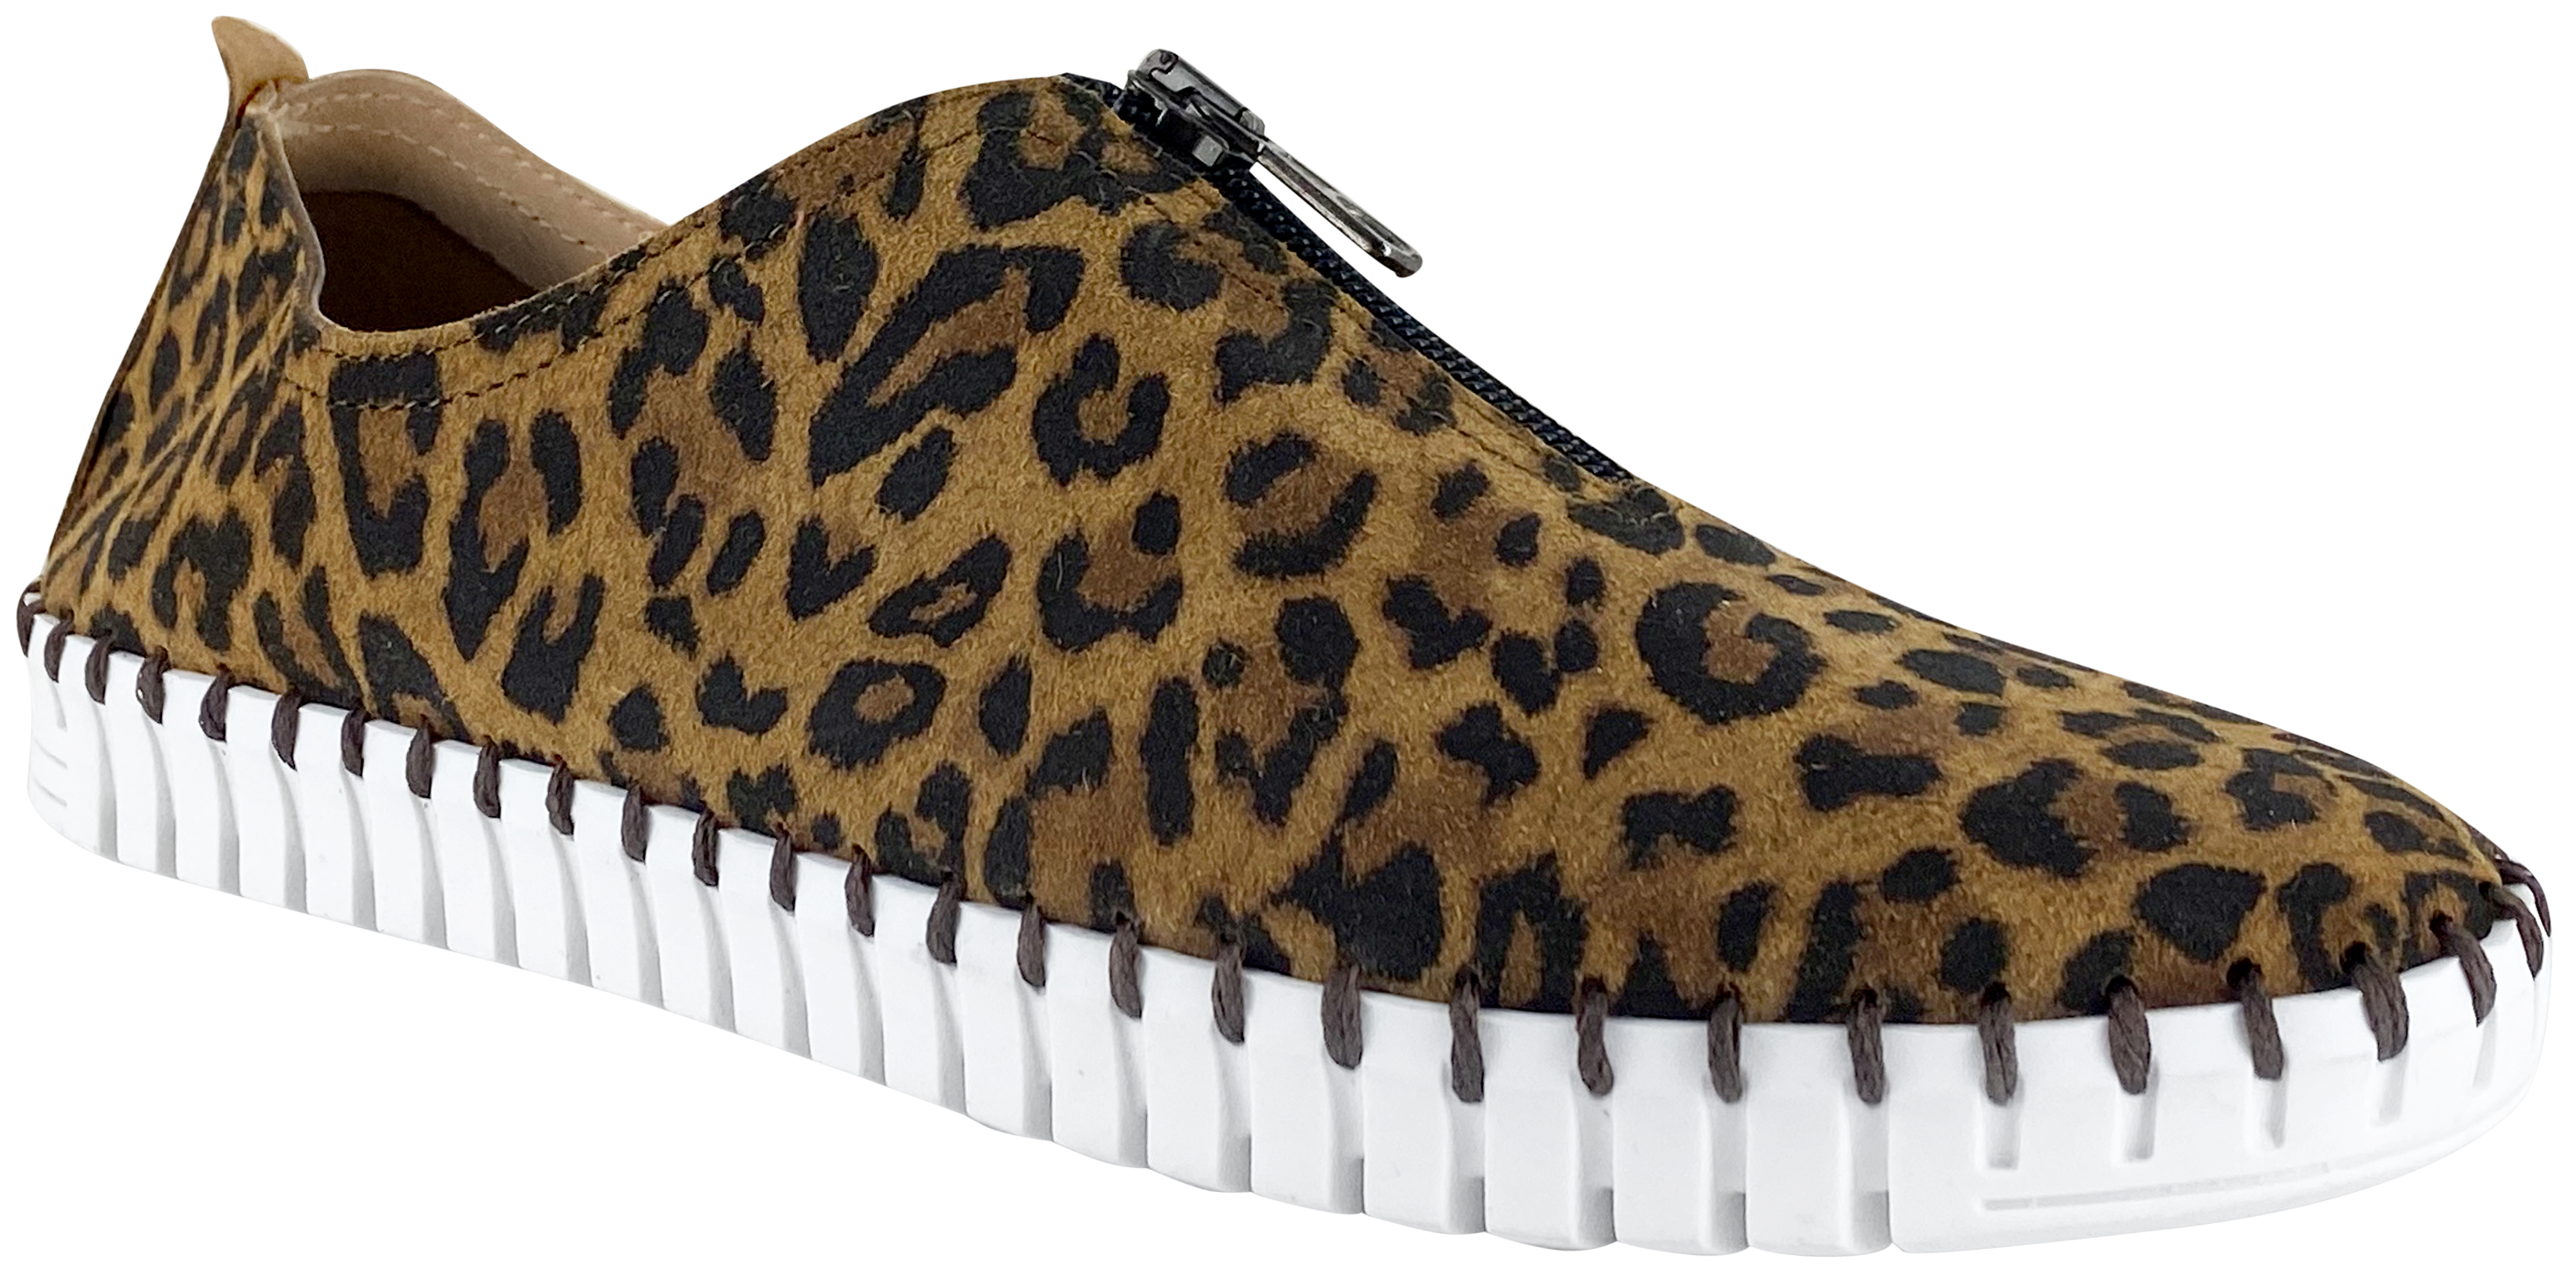 Eric Michael  Sneakers- Marlo Leopard